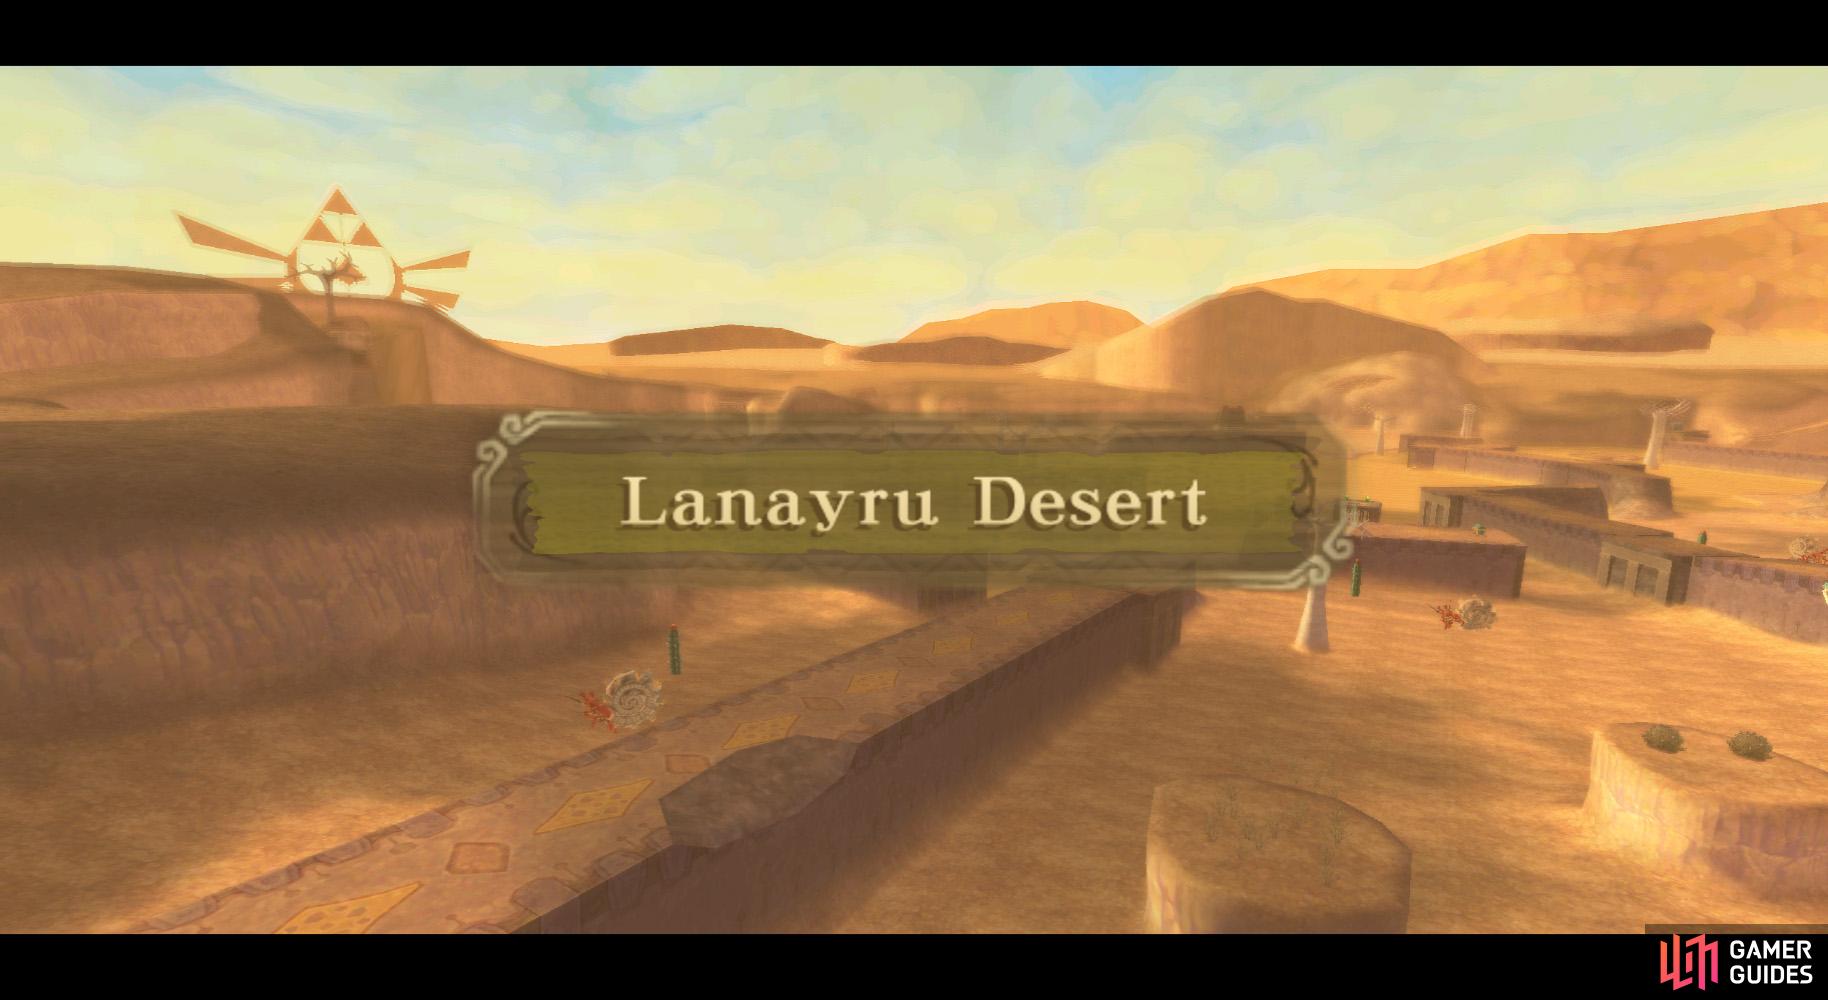 Lanayru Desert is, well, a desert. But it wasn't always like this.